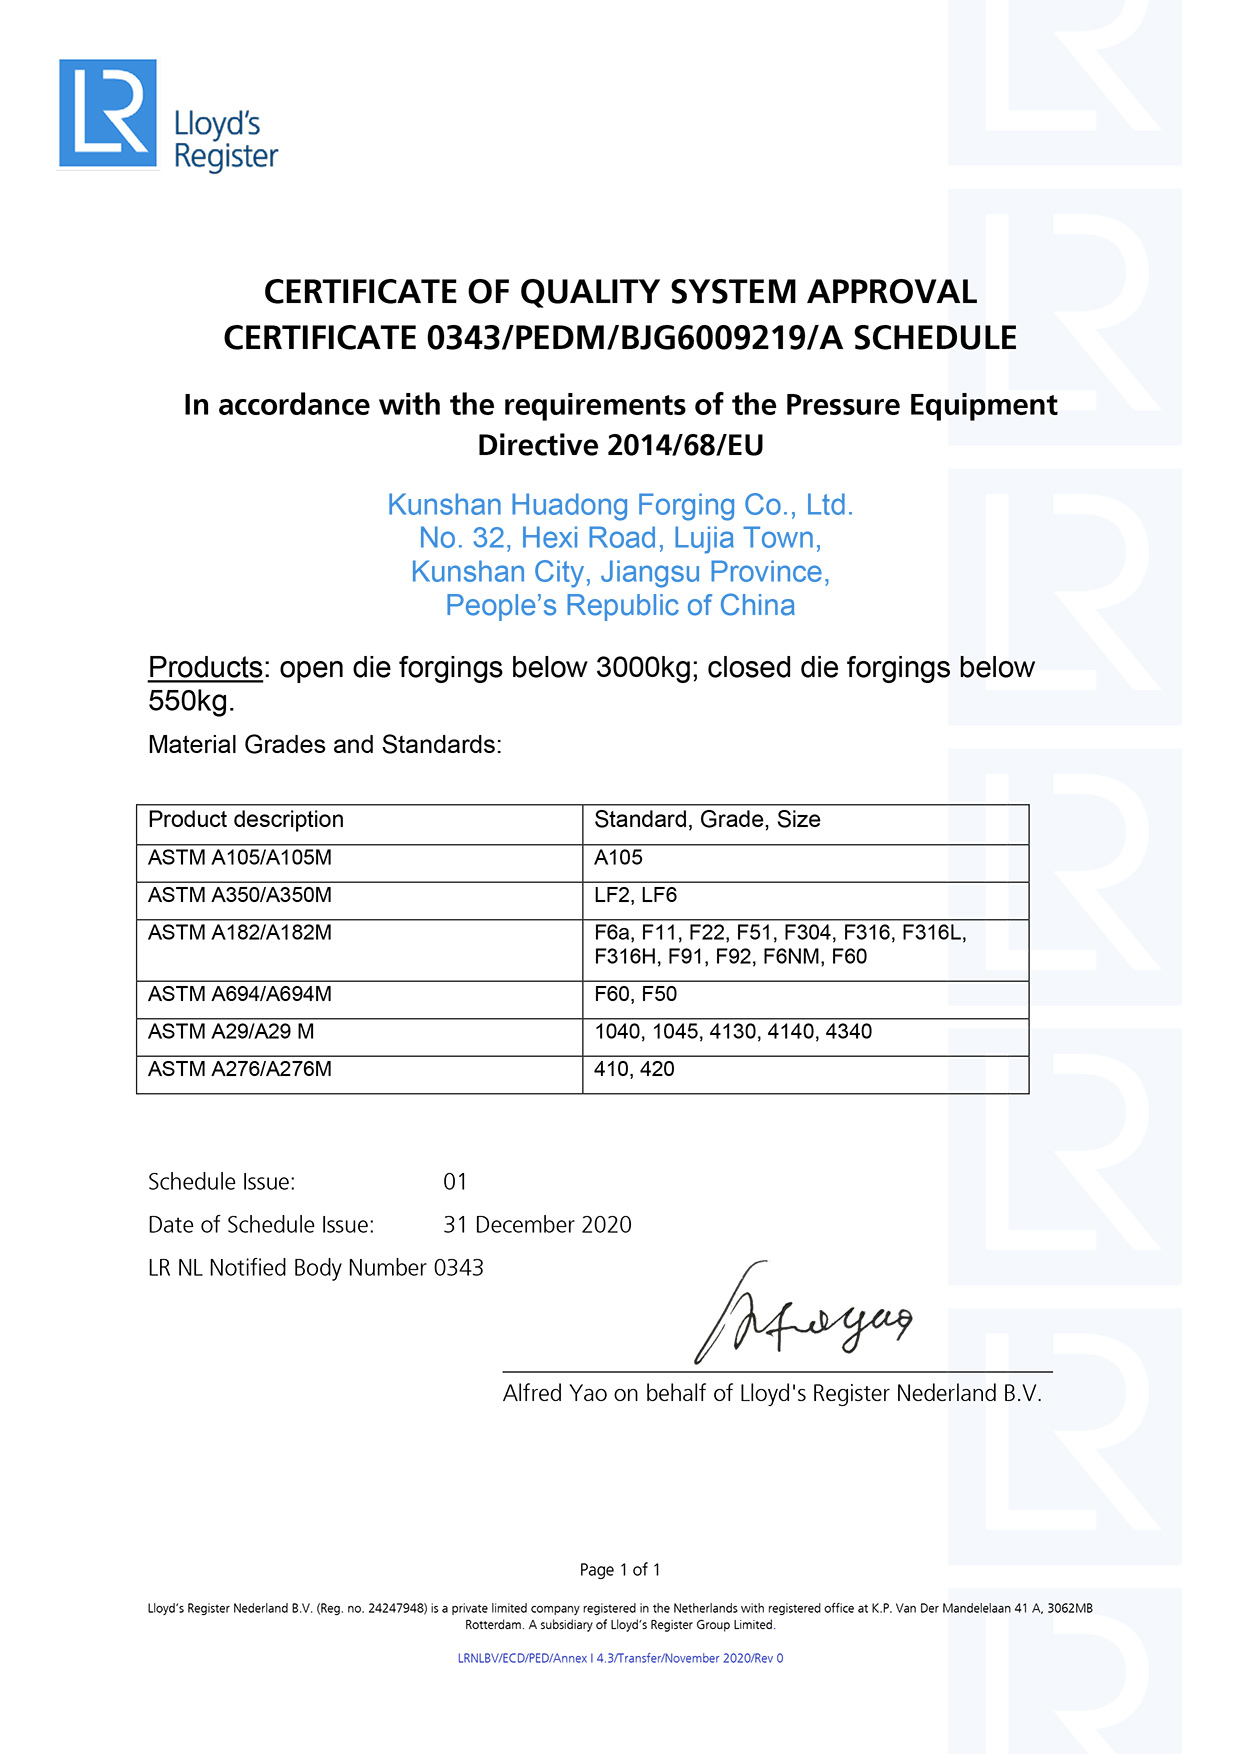 BJG6009219 Kunshan Huadong Forging PEDM Transfer, signed